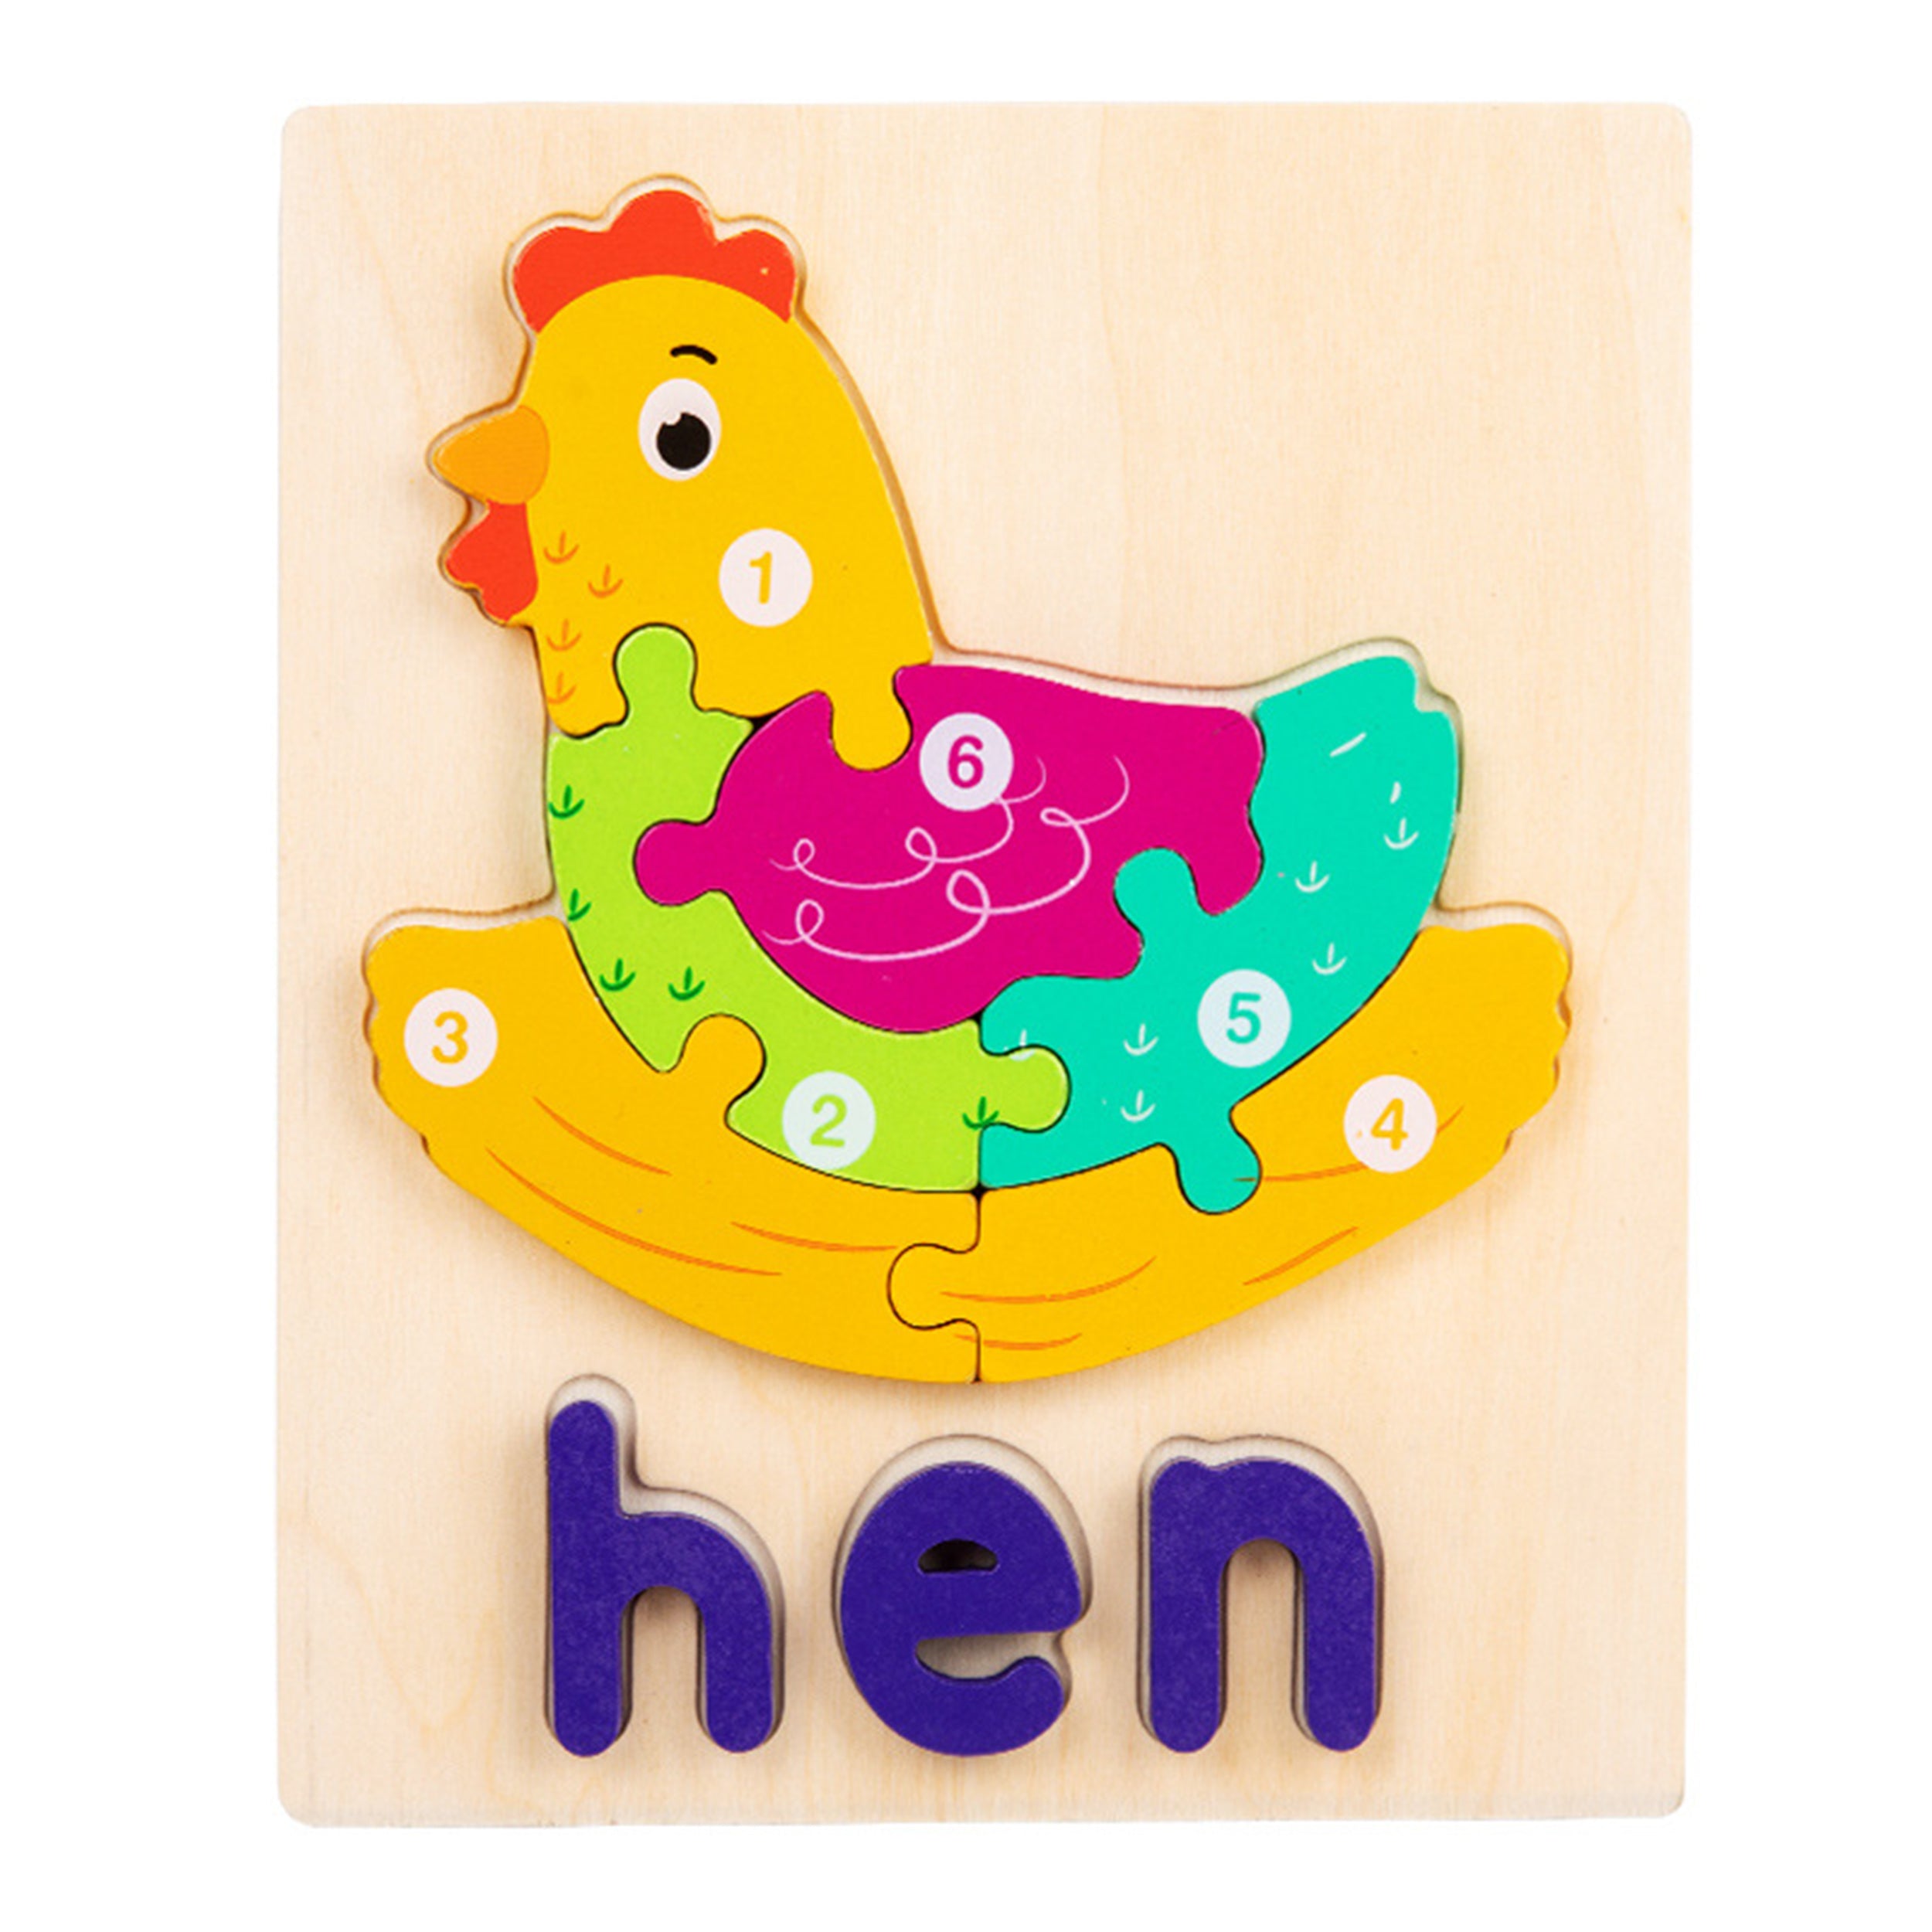 Montessori Educational Wooden Puzzle With Words - Promote Language Development in Children